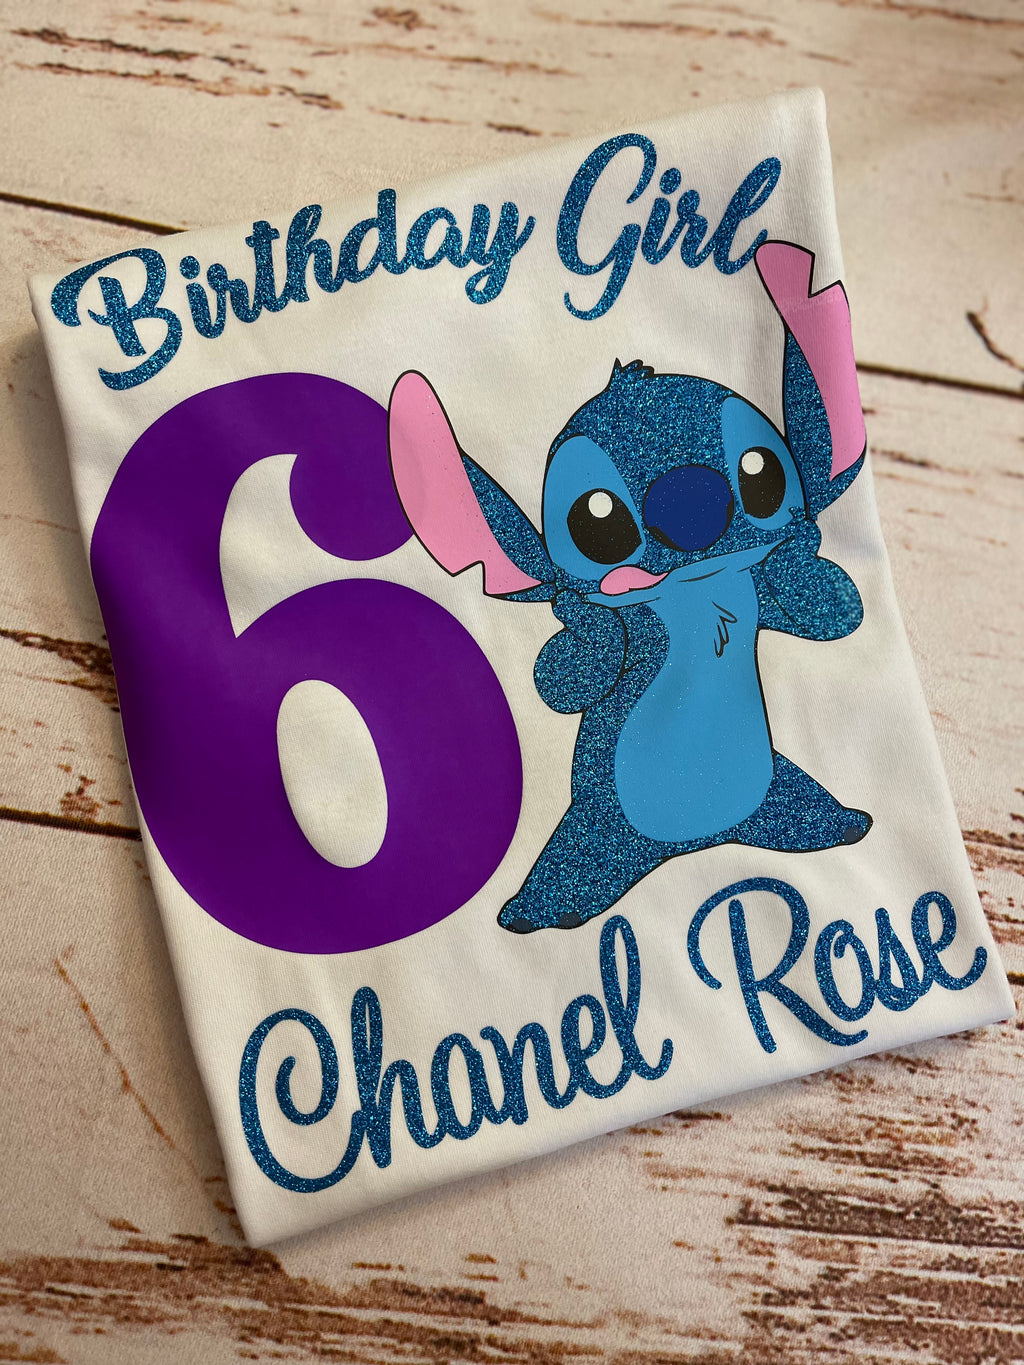  Disney Lilo & Stitch - Camiseta de cumpleaños para